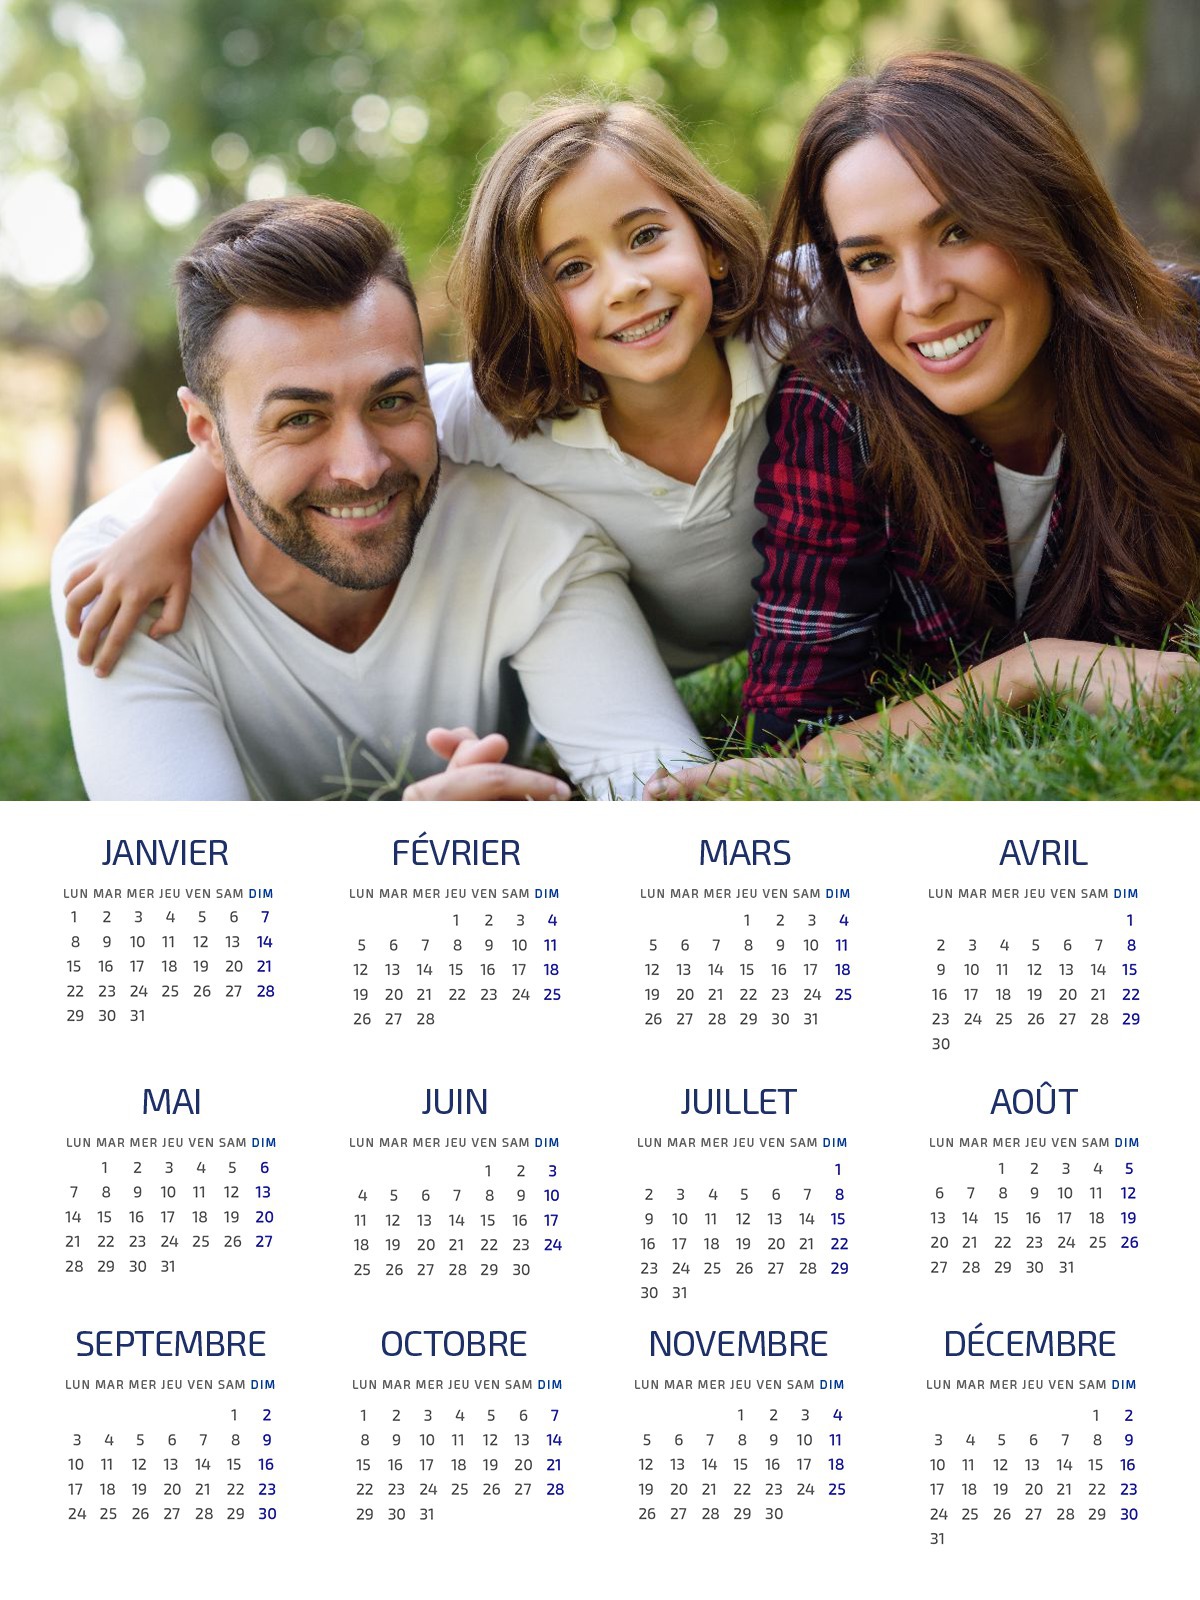 Calendario 2018 con foto personalizable Montaje fotografico